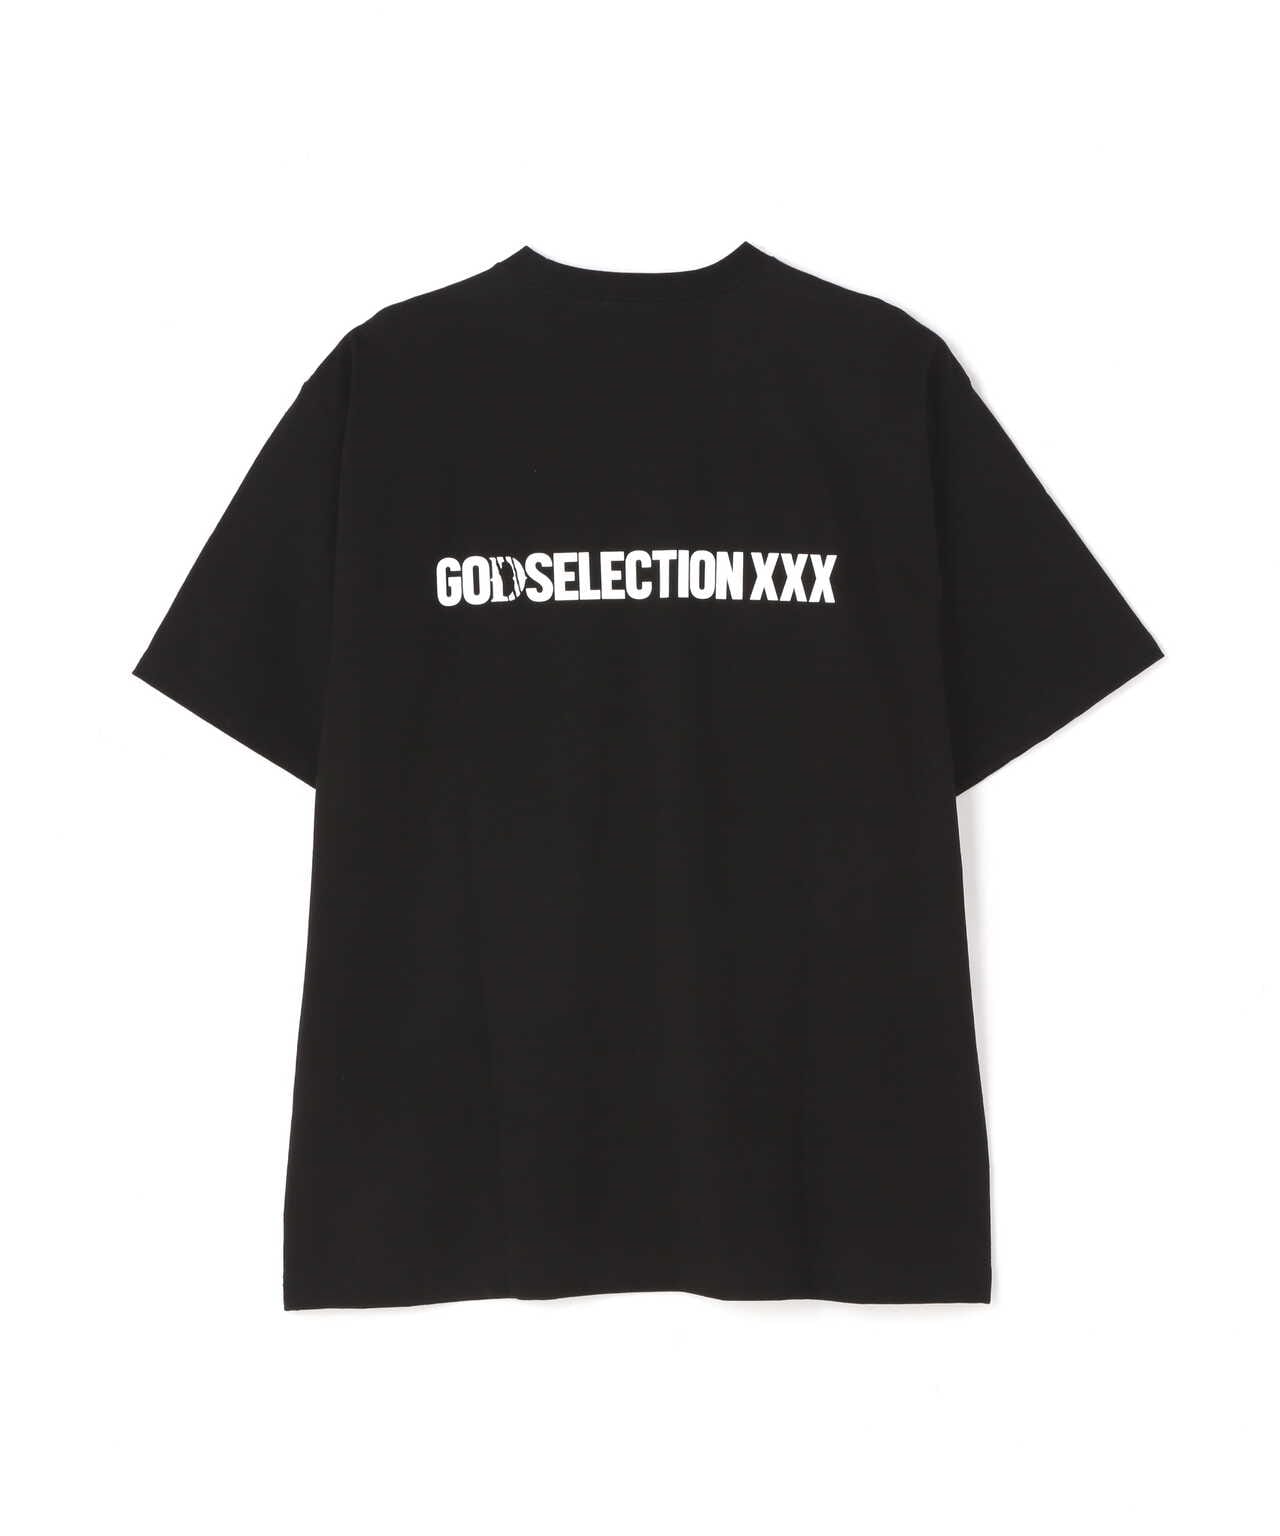 GOD SELECTION XXX x ONE PIECE/GX-S22-OPST-02/ルフィ